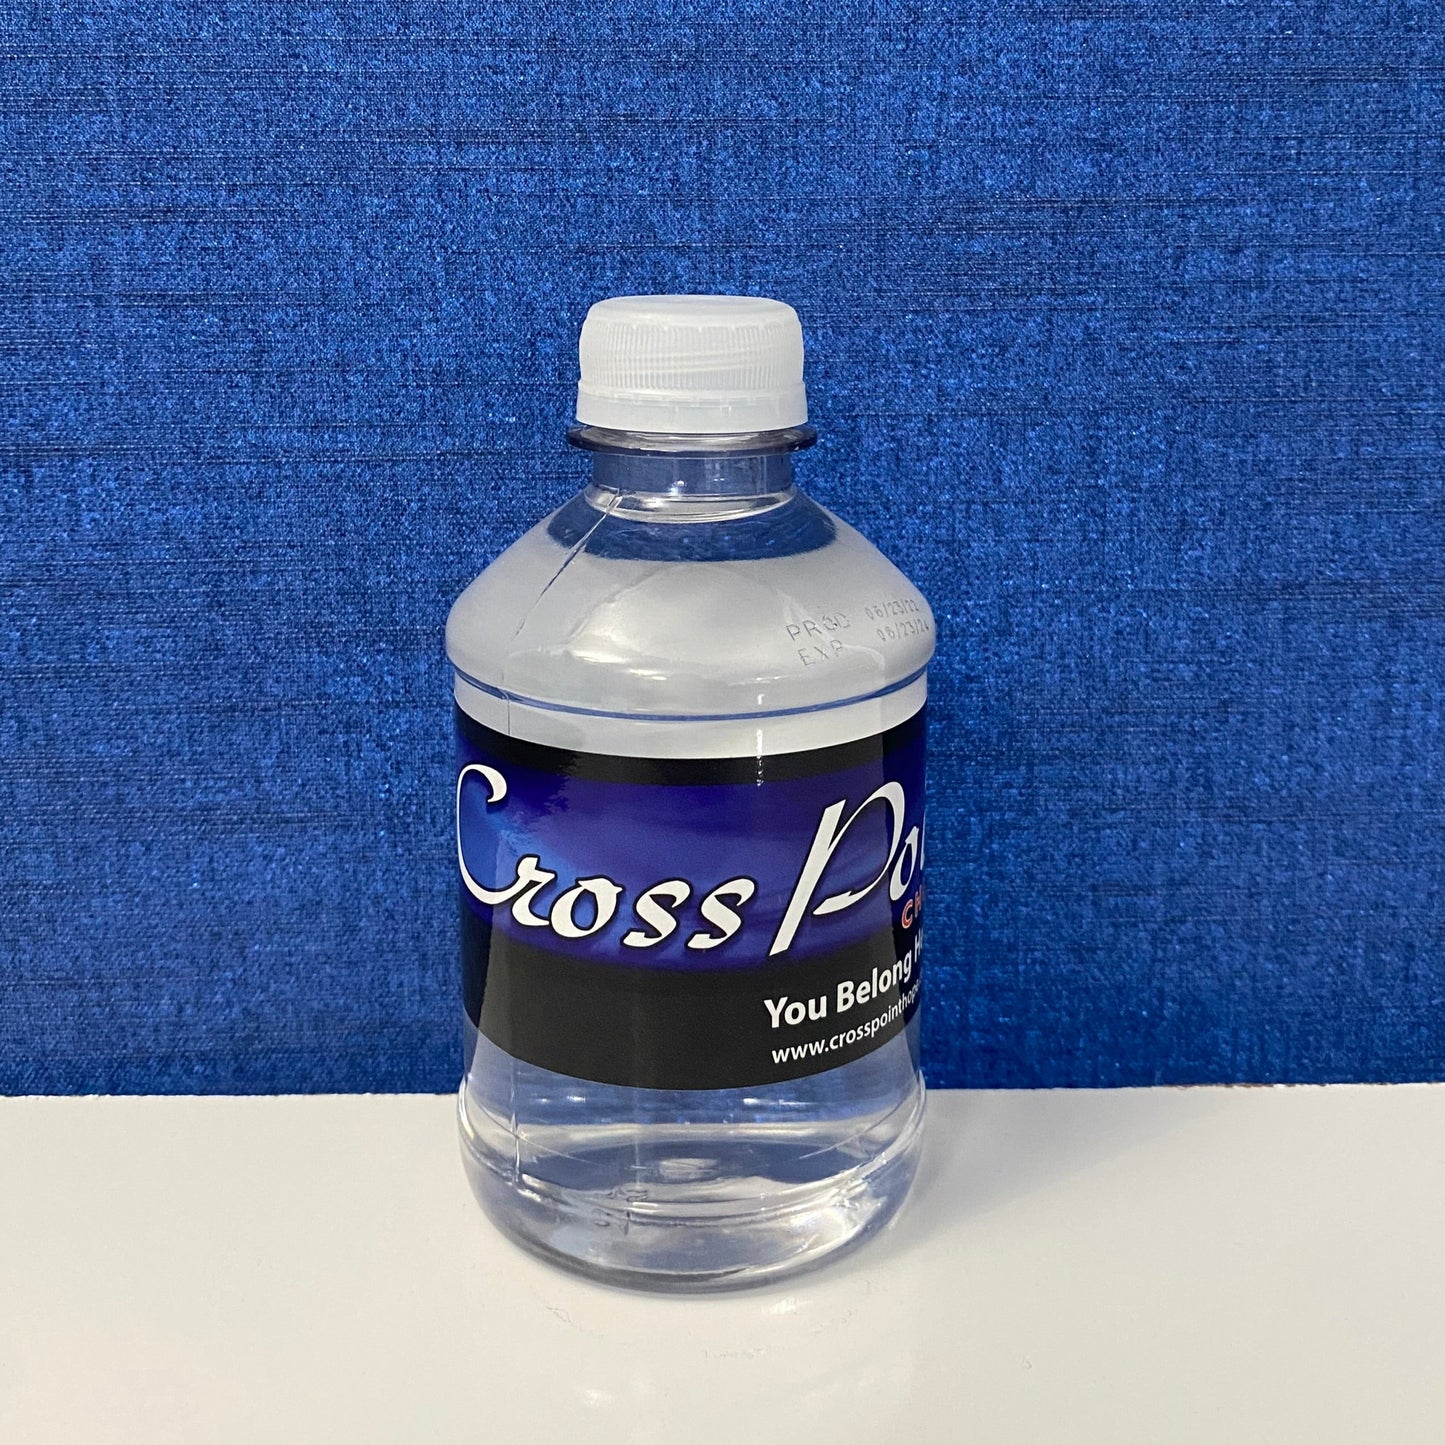 8 oz Custom Label Water Bottles